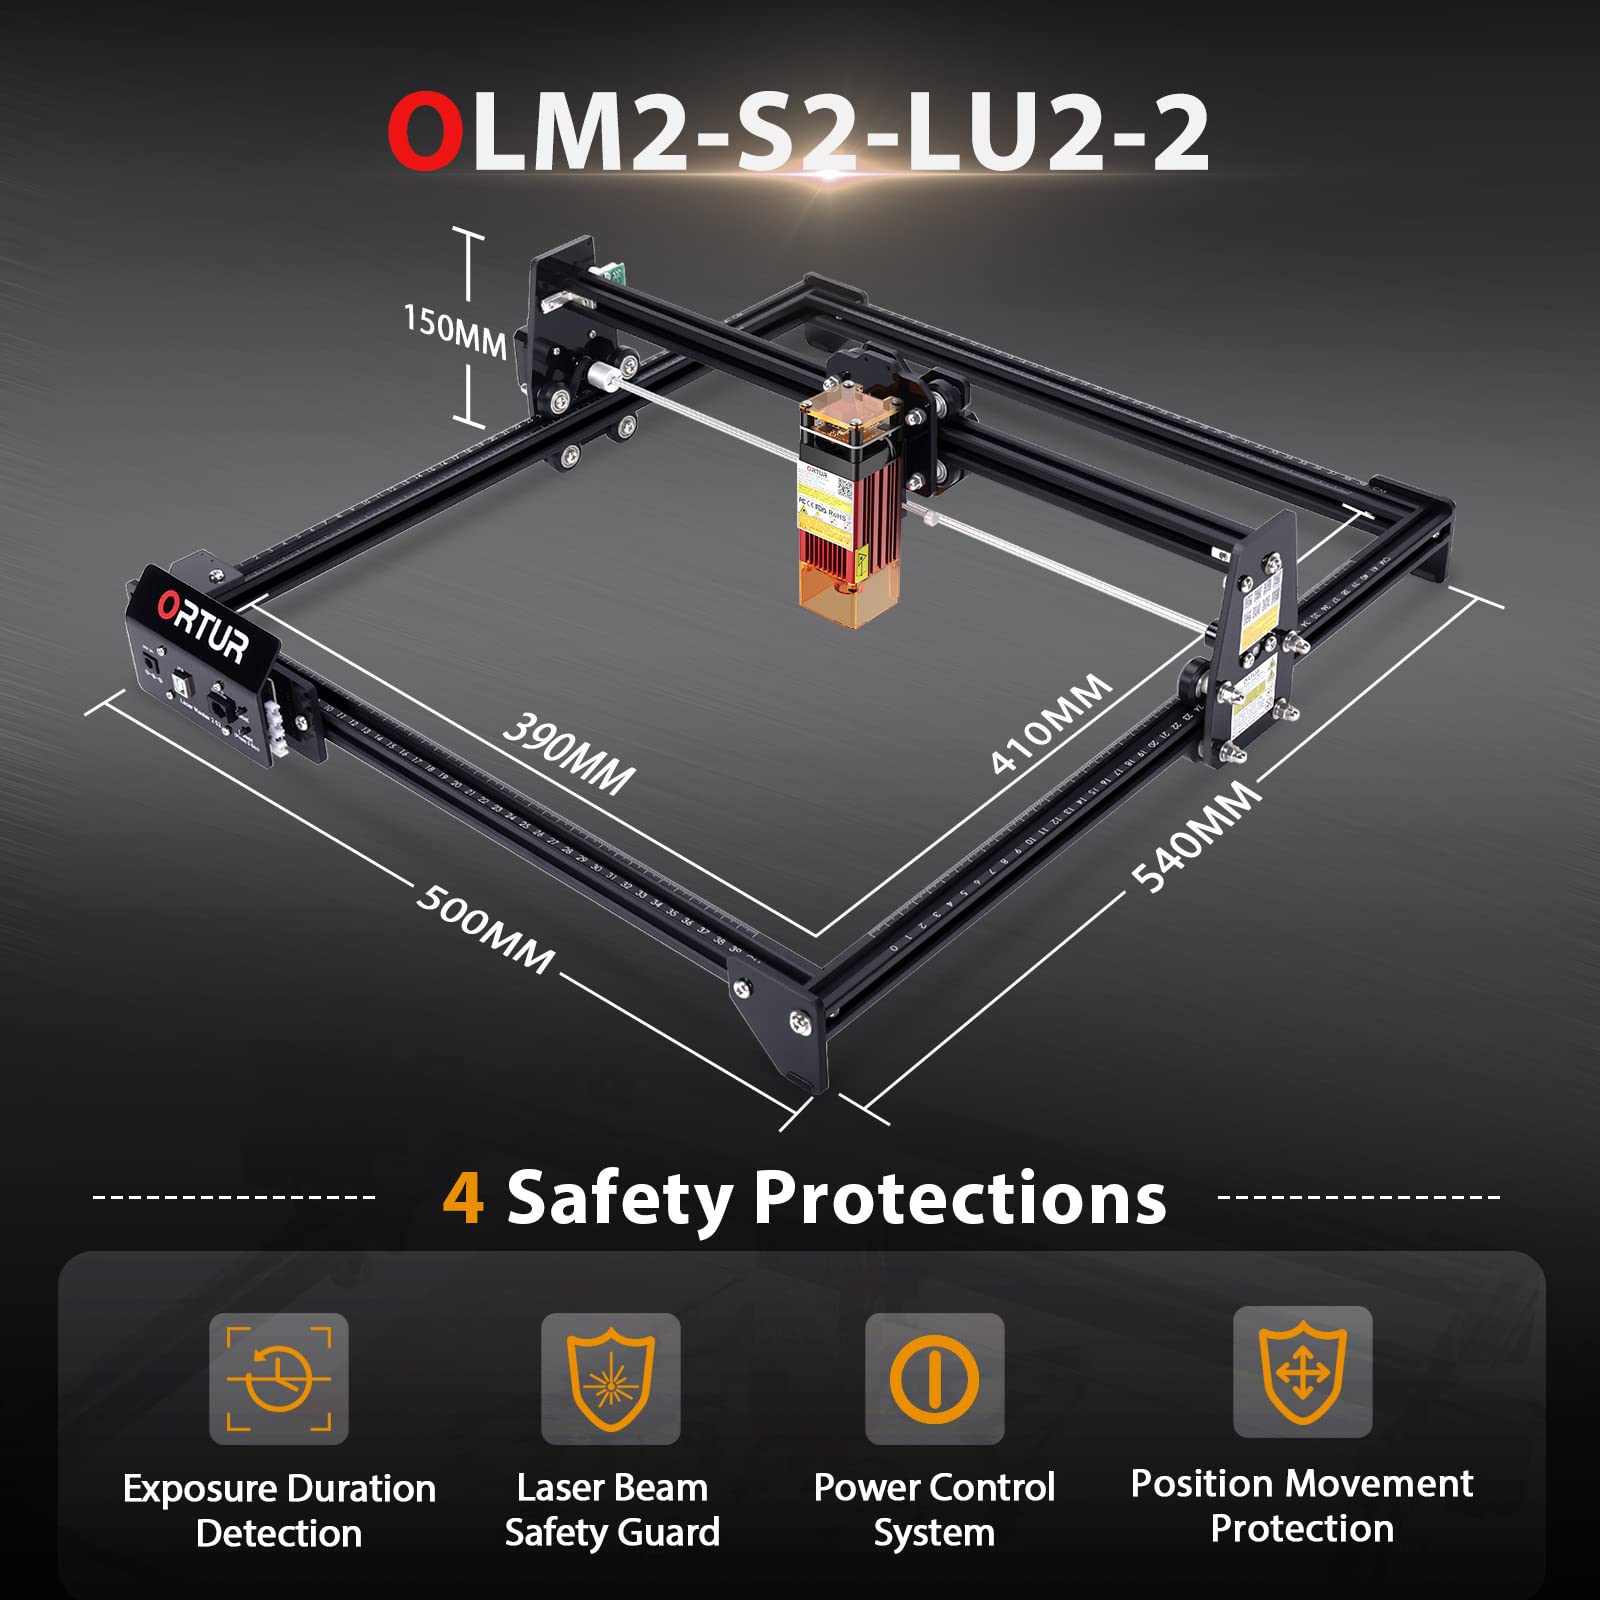 [US Direct] Ortur LM3 LE Laser Engraving & Cutting Machine 10W Dual Module  Higher Precision Laser Engraver 400x400mm Engraving Area 15,000mm/min